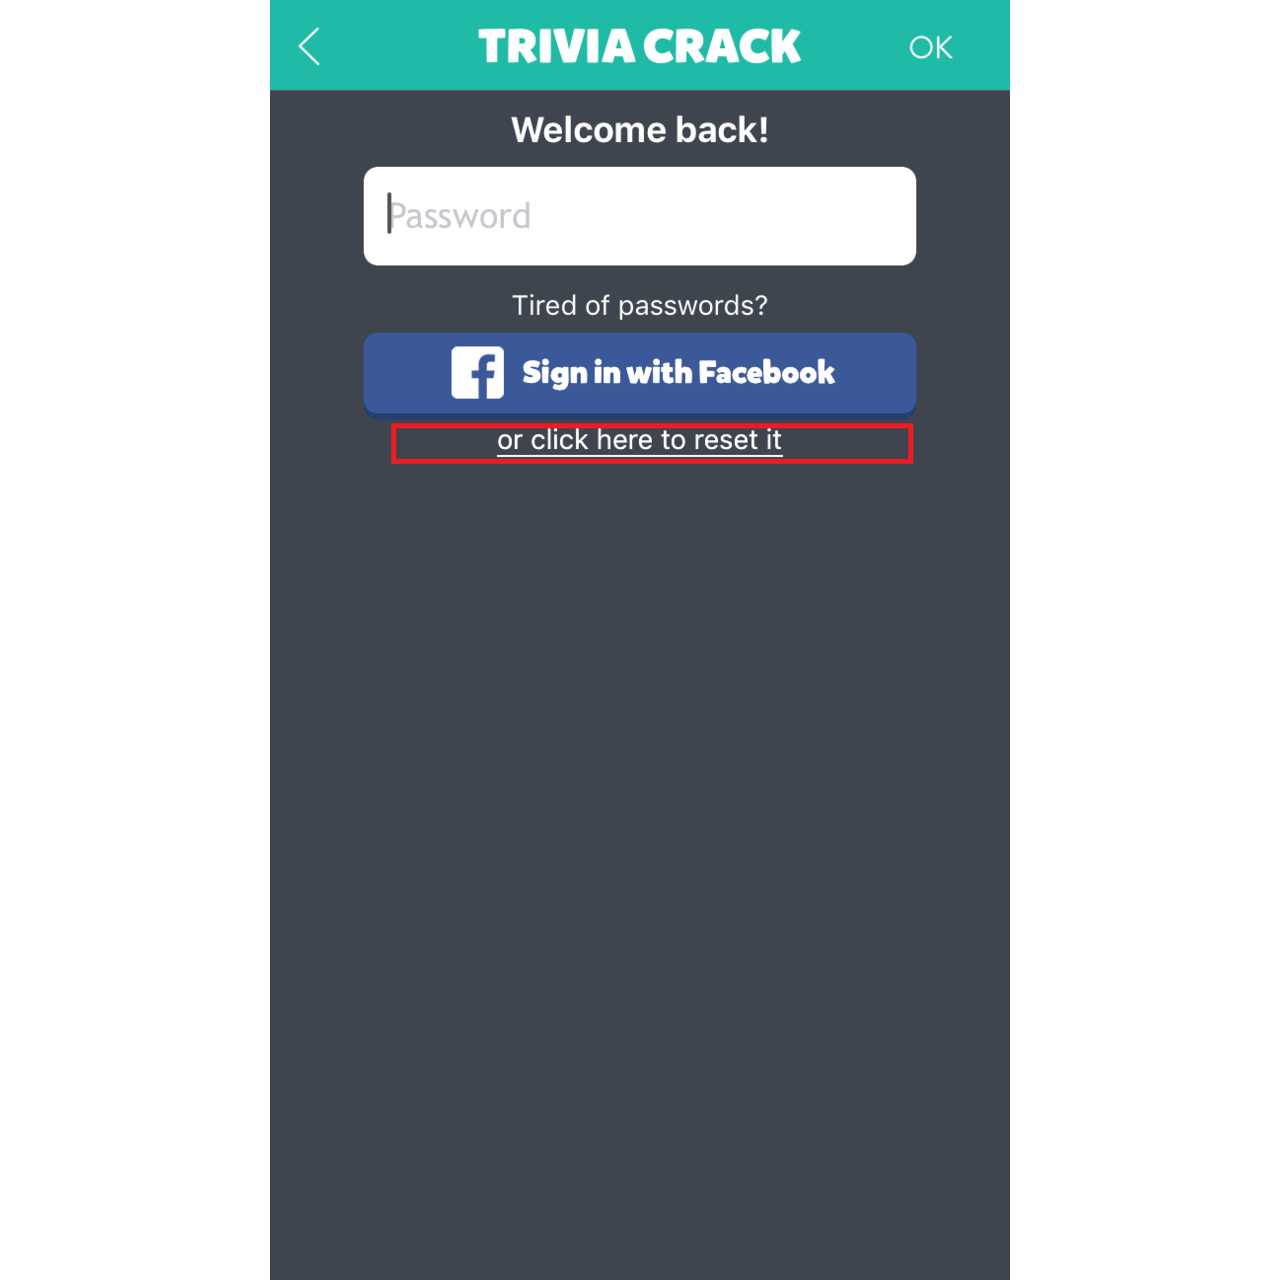 Play Trivia Crack on PC 